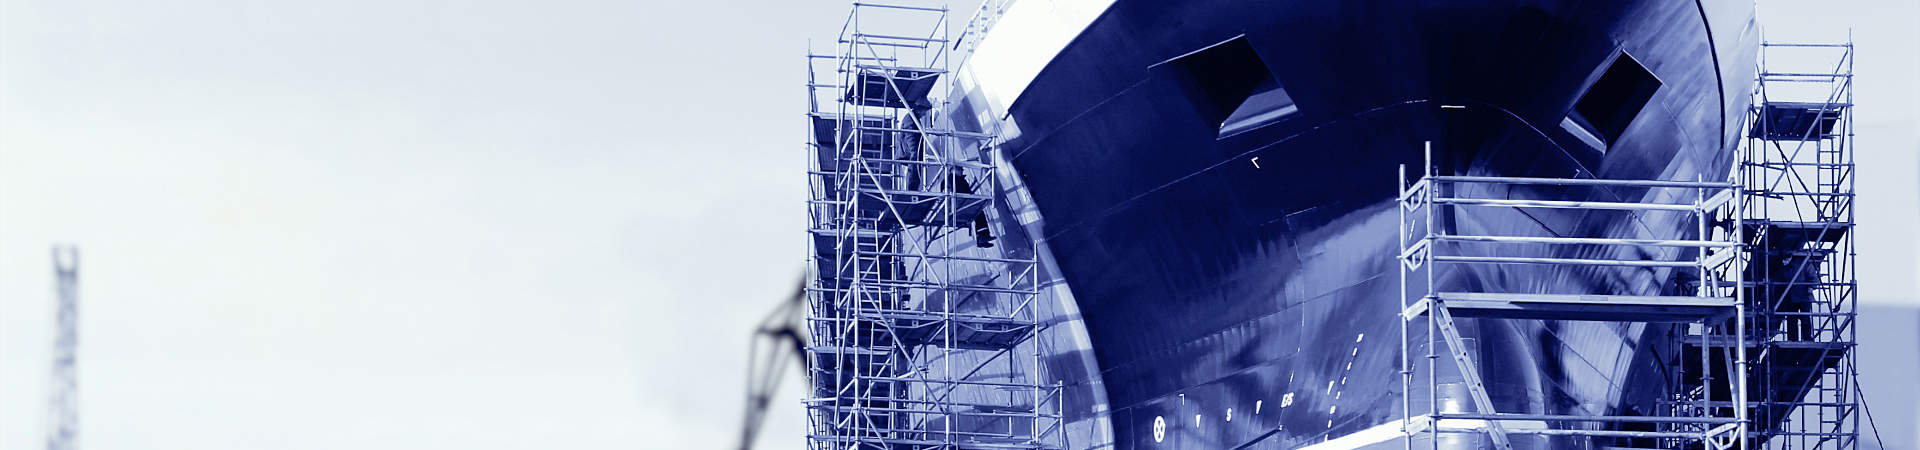 Shipbuilding image